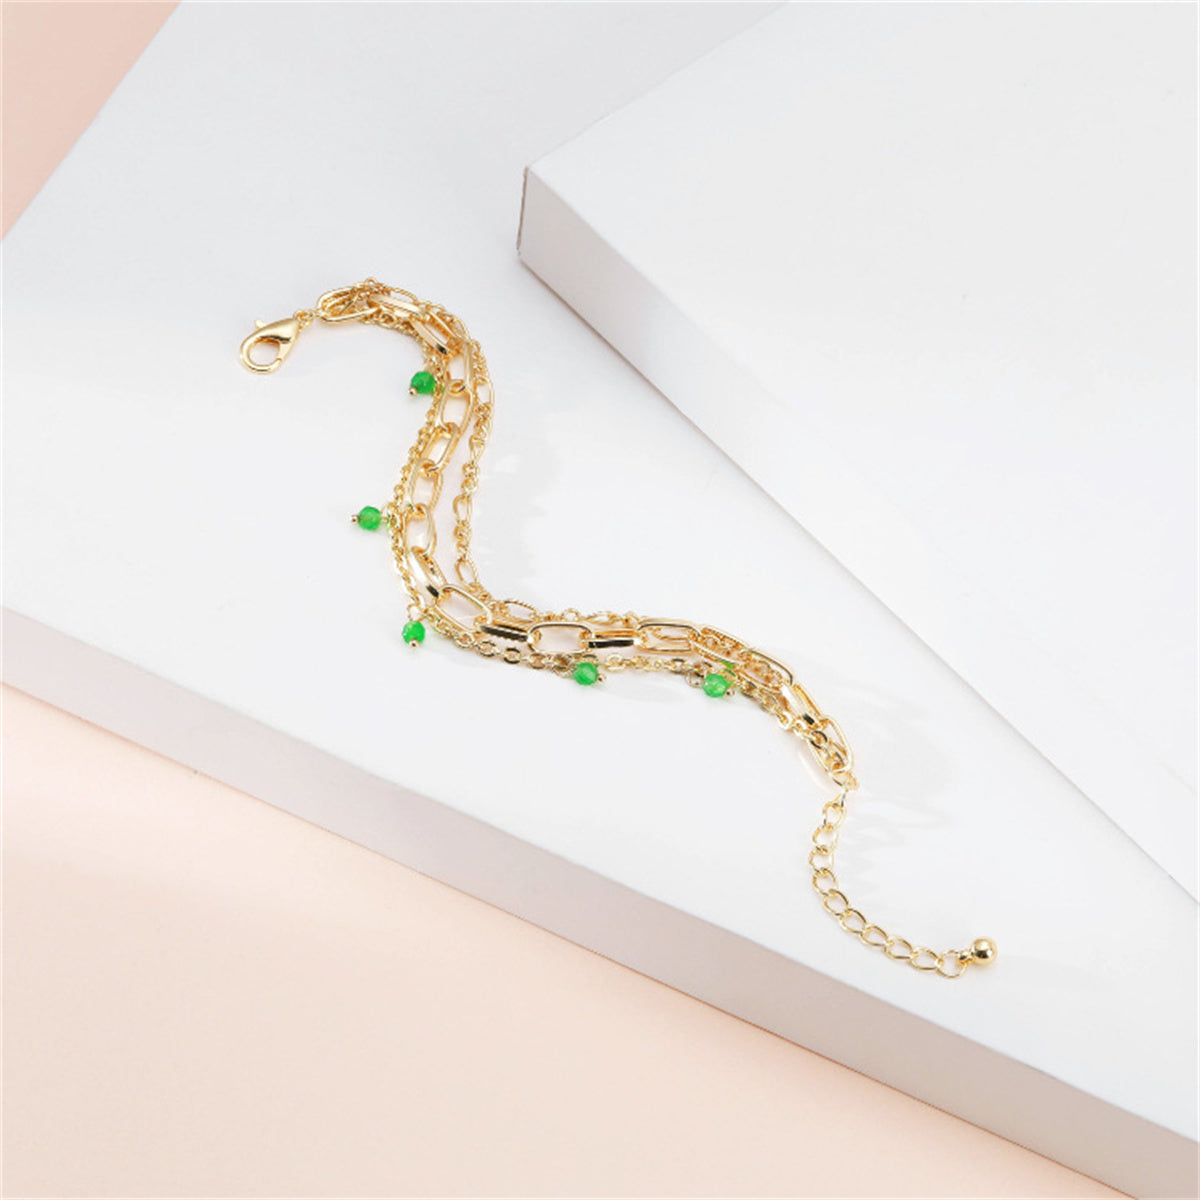 Green & 18K Gold-Plated Layered Charm Bracelet